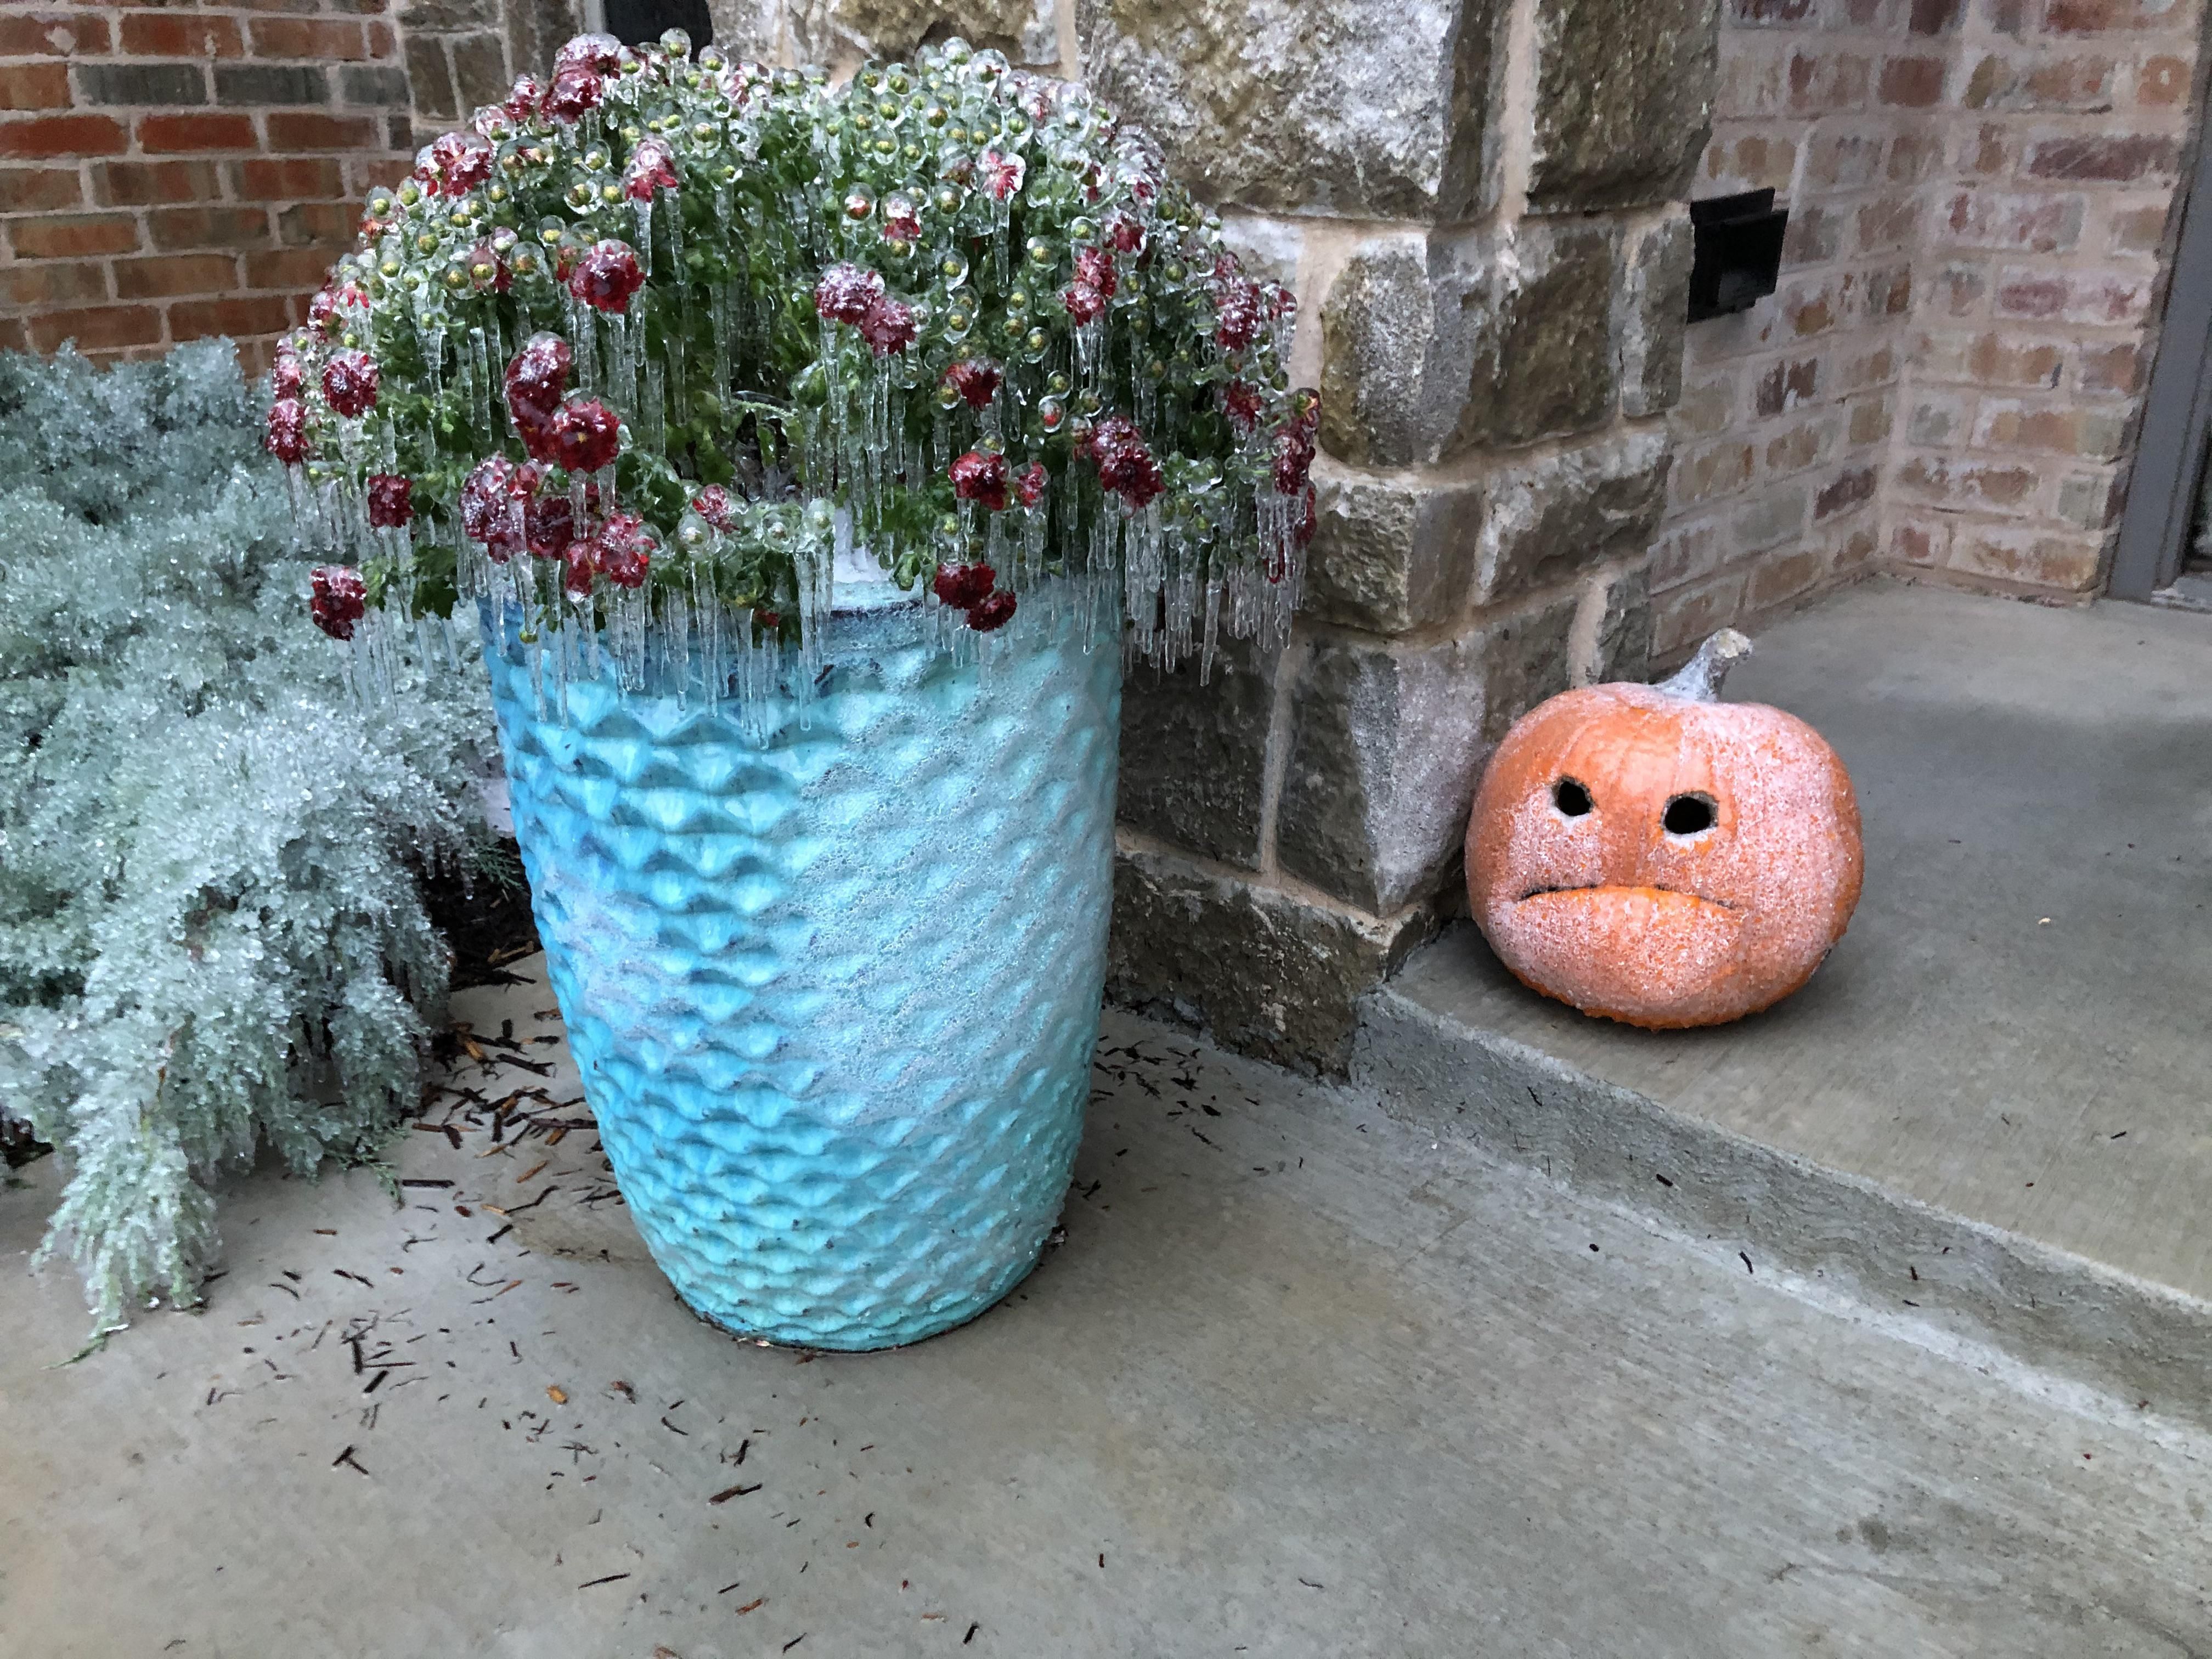 Had an ice storm a few days ago. My pumpkin didn’t seem very happy about it.